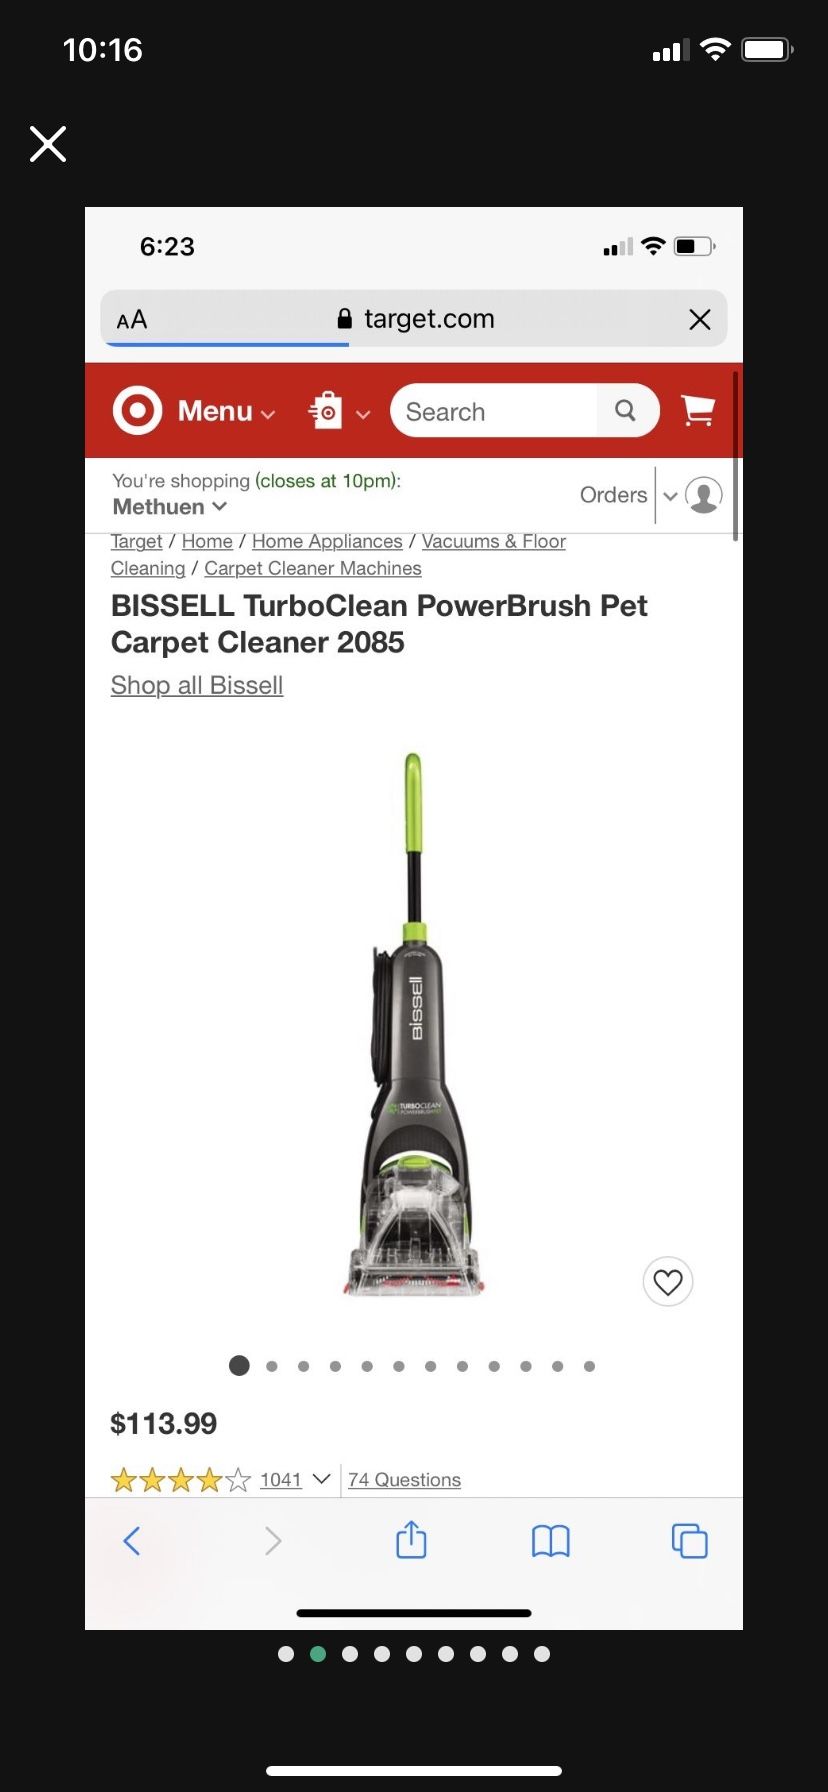 BISSELL TurboClean PowerBrush Pet Carpet Cleaner 2085